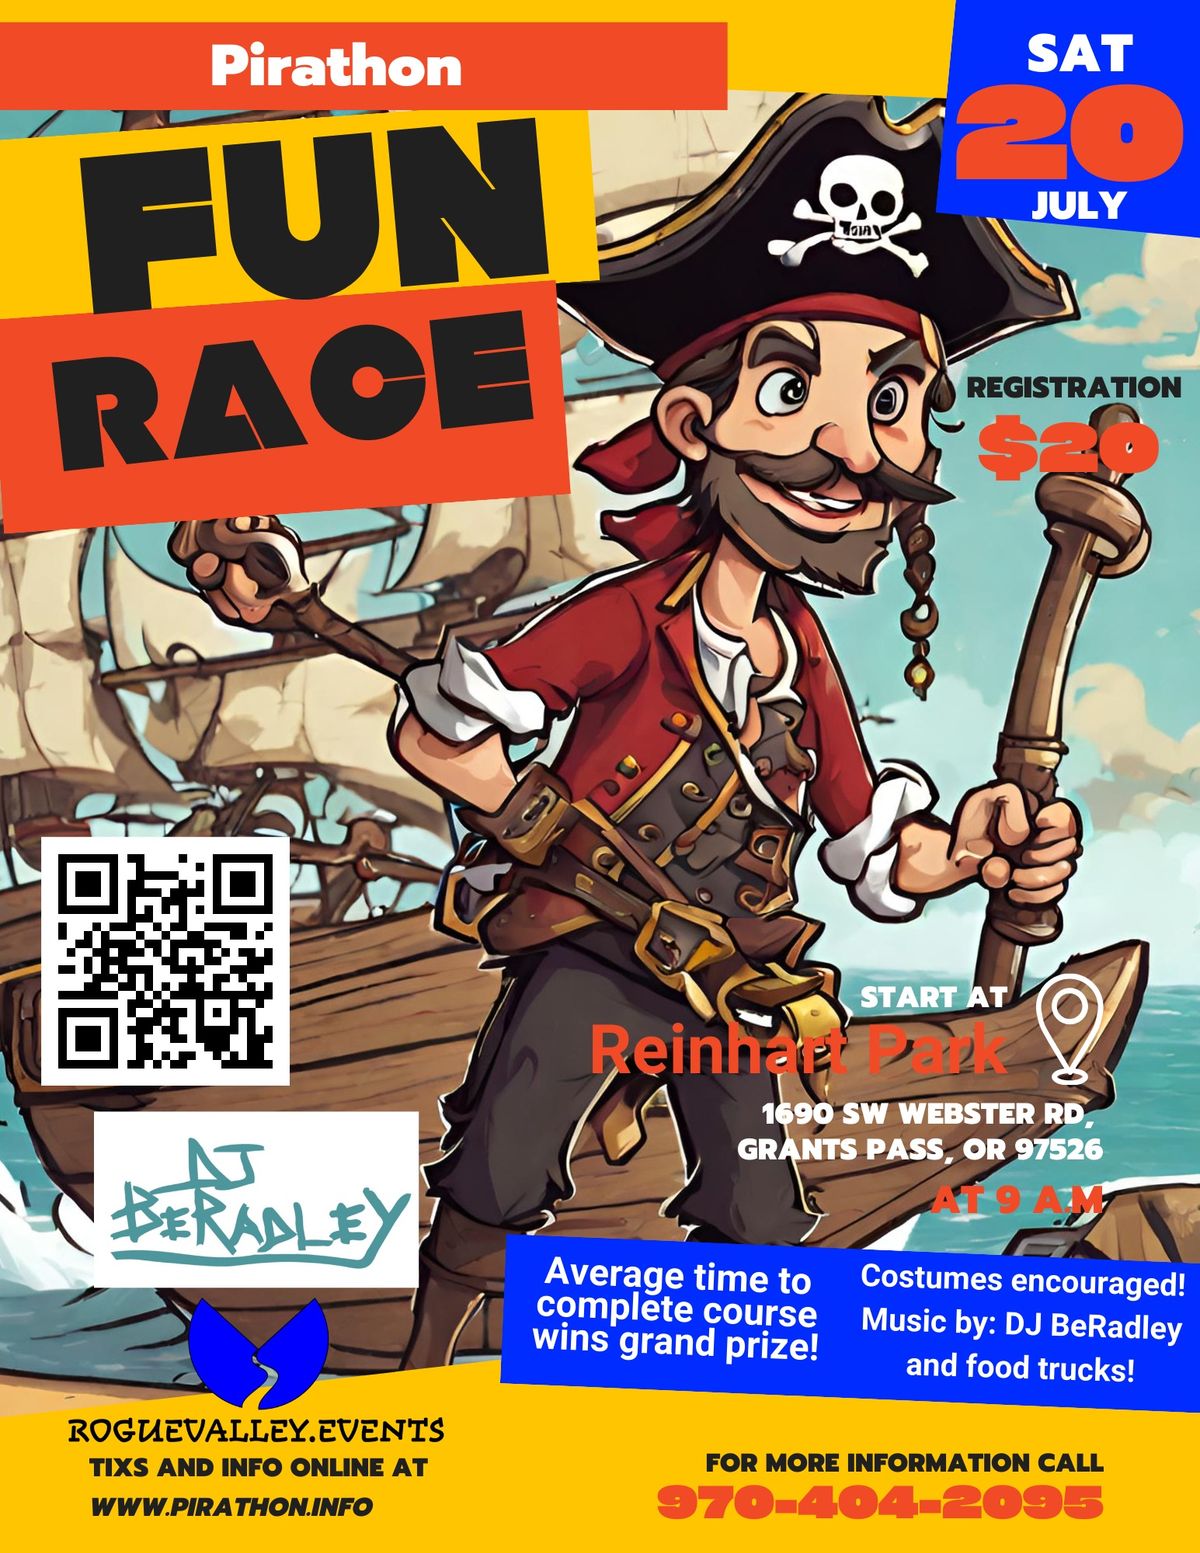 Pirathon-Pirate Themed Fun Race